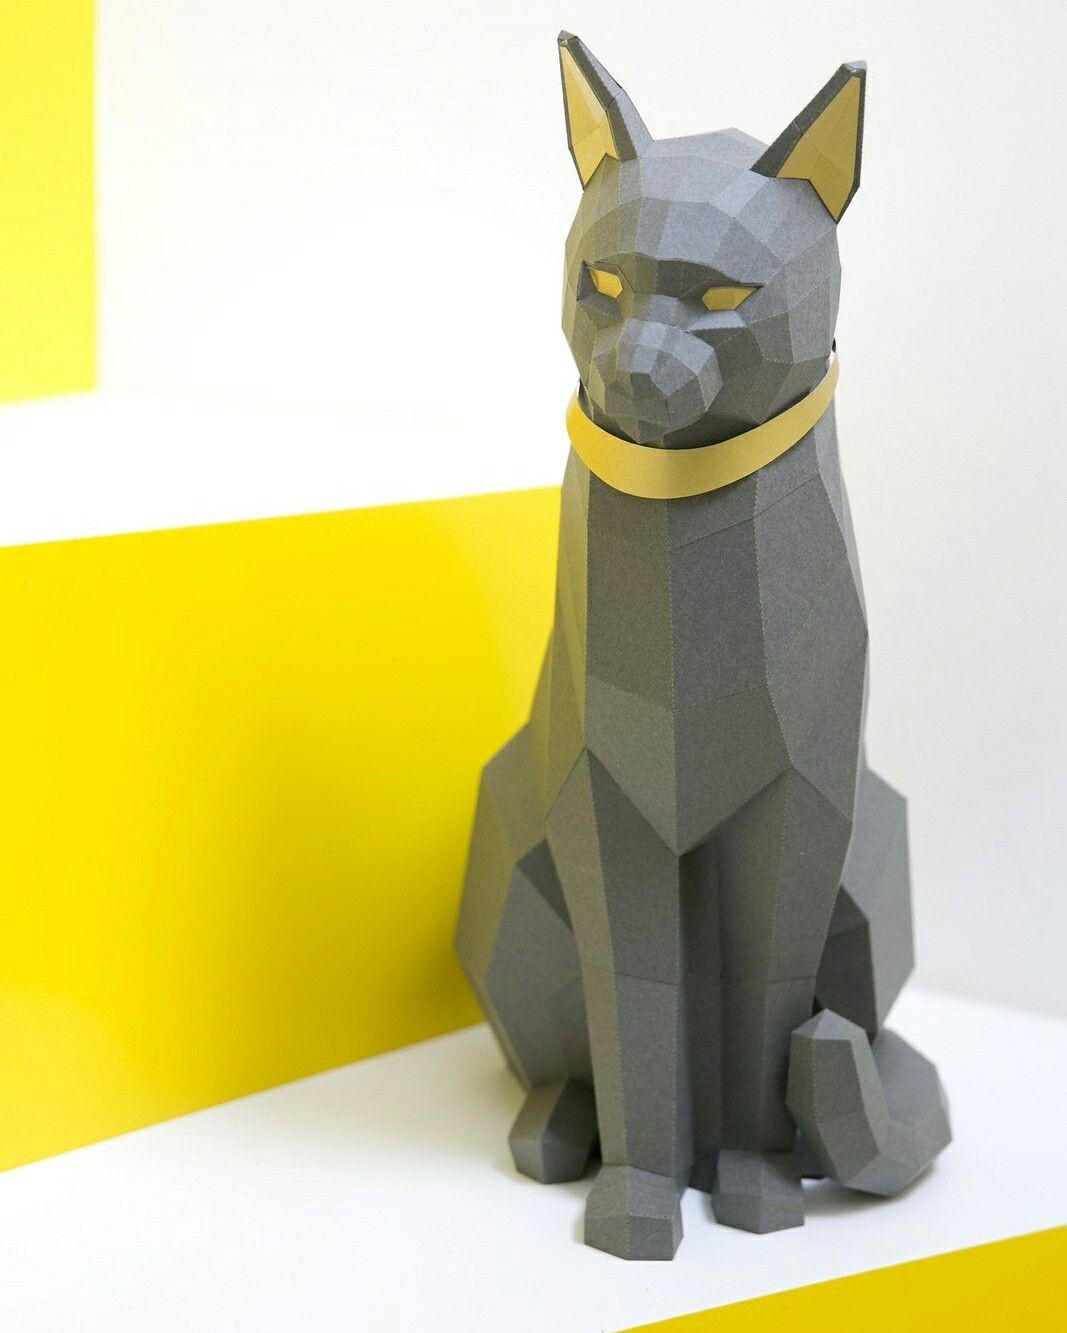 Papercraft Cat Black Cat Papercraft Kit Premium Version with Gold Applications